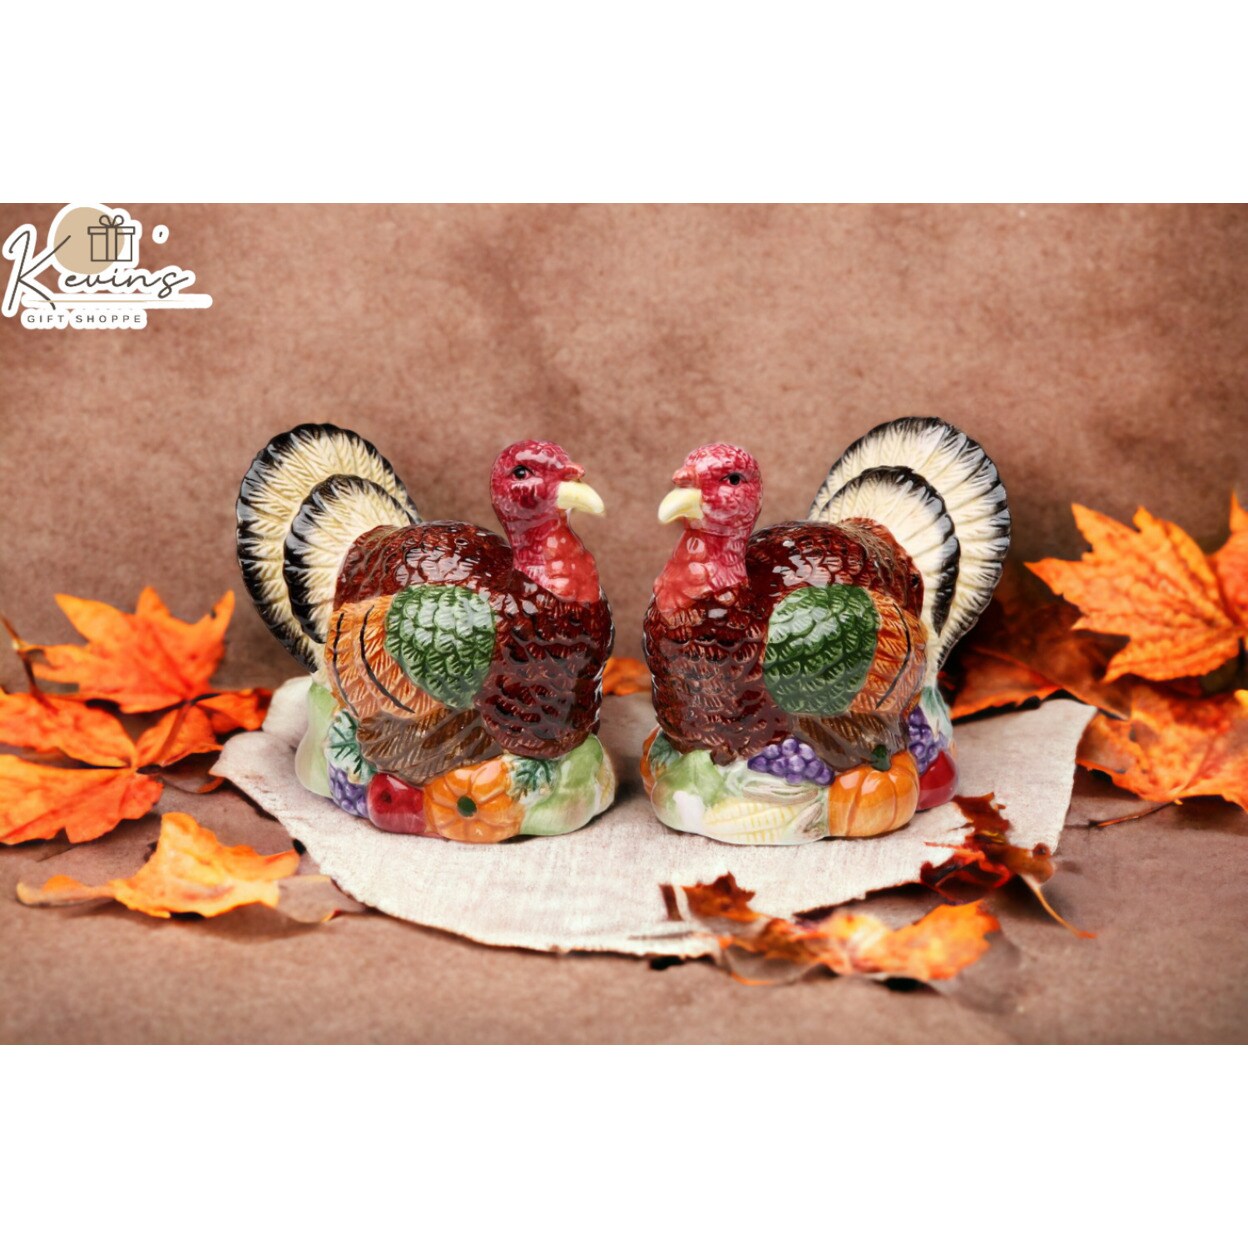 kevinsgiftshoppe Gobble Gobble Ceramic Thanksgiving Turkey Salt and Pepper Shakers Home Decor   Kitchen Decor Fall Decor